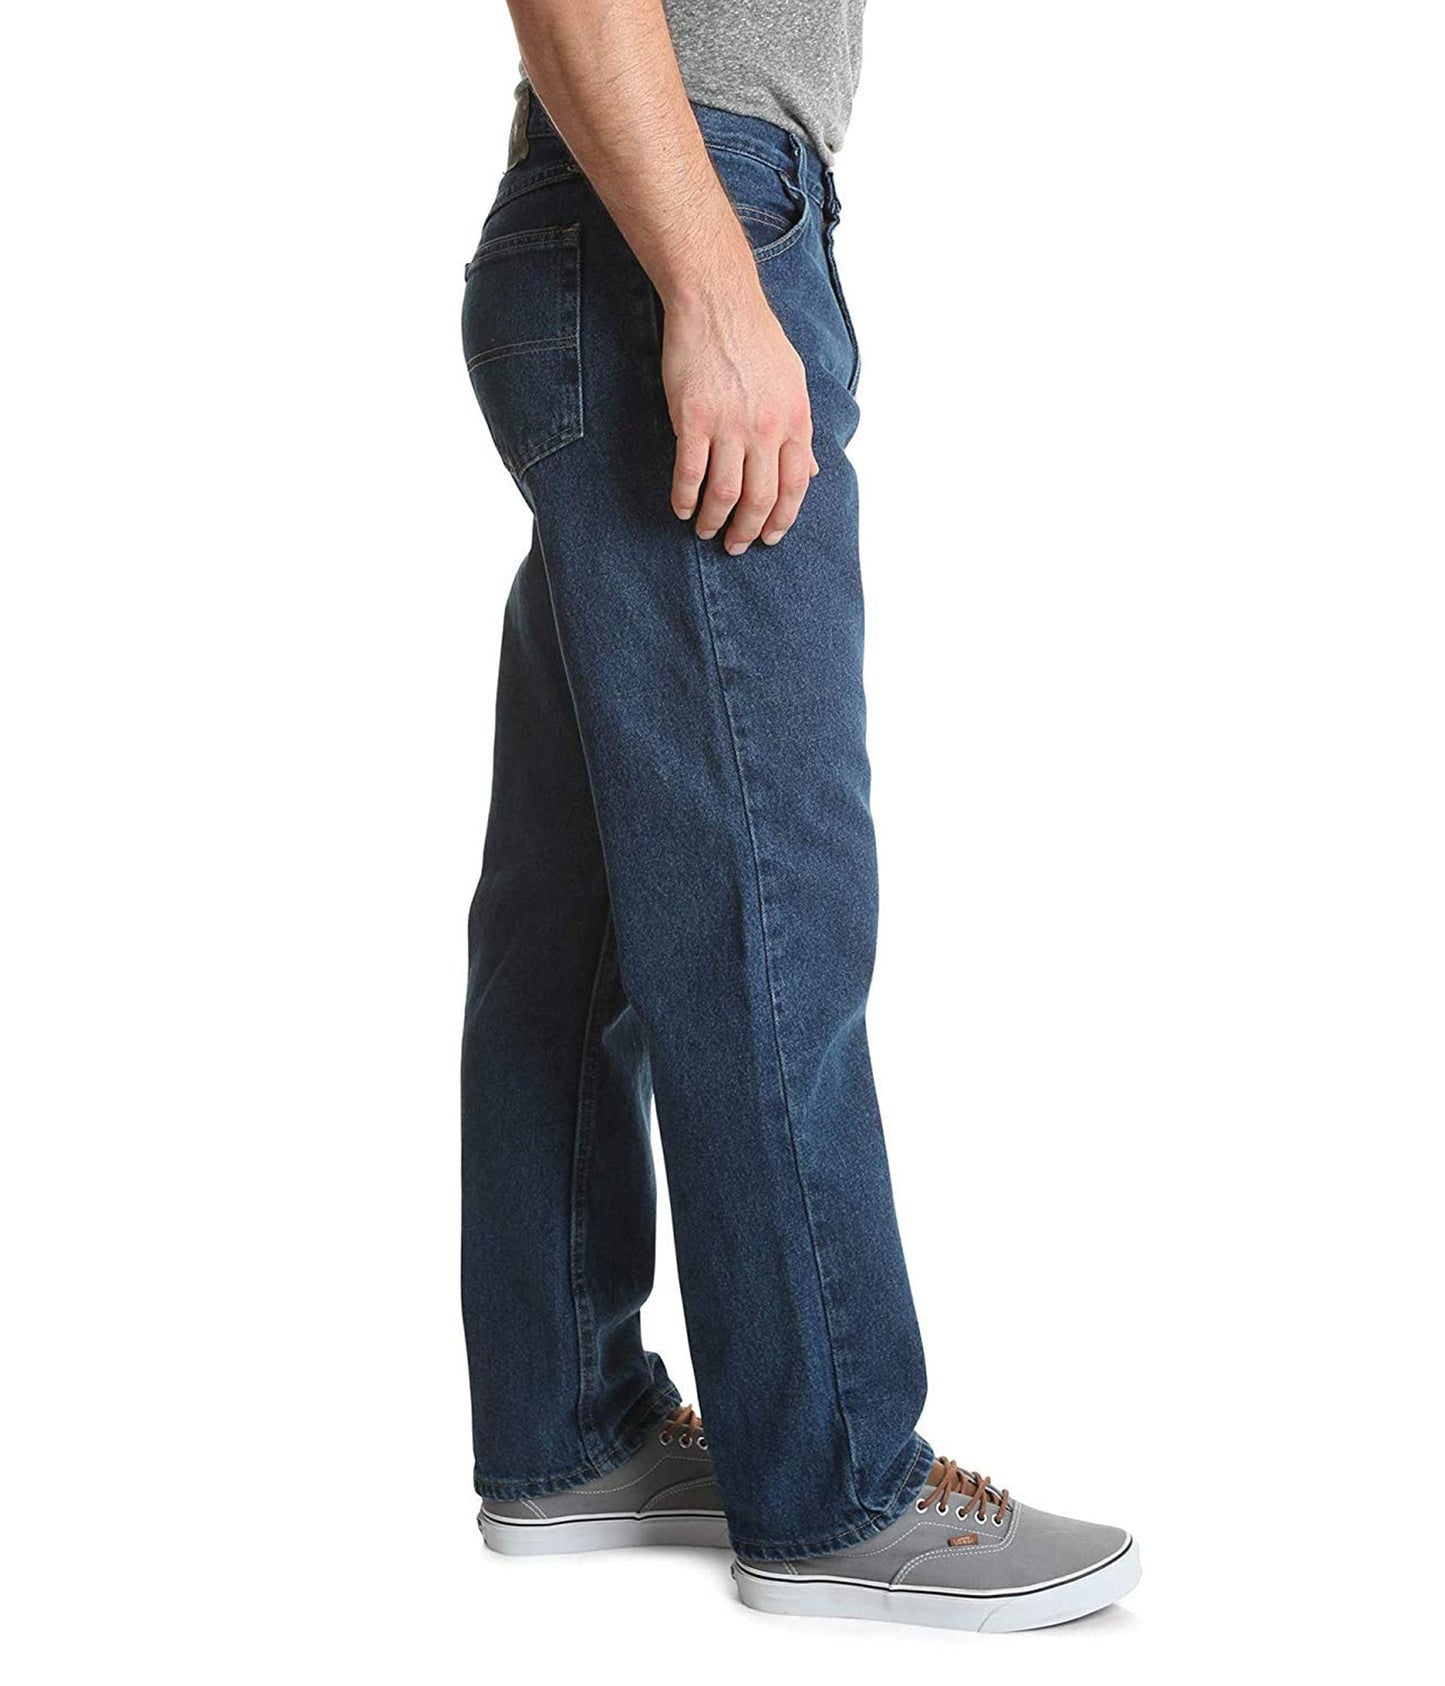 Wrangler Authentics Men's Big & Tall Classic 5-Pocket Relaxed Fit Cotton Jean, Dark Stonewash, 44W x 30L